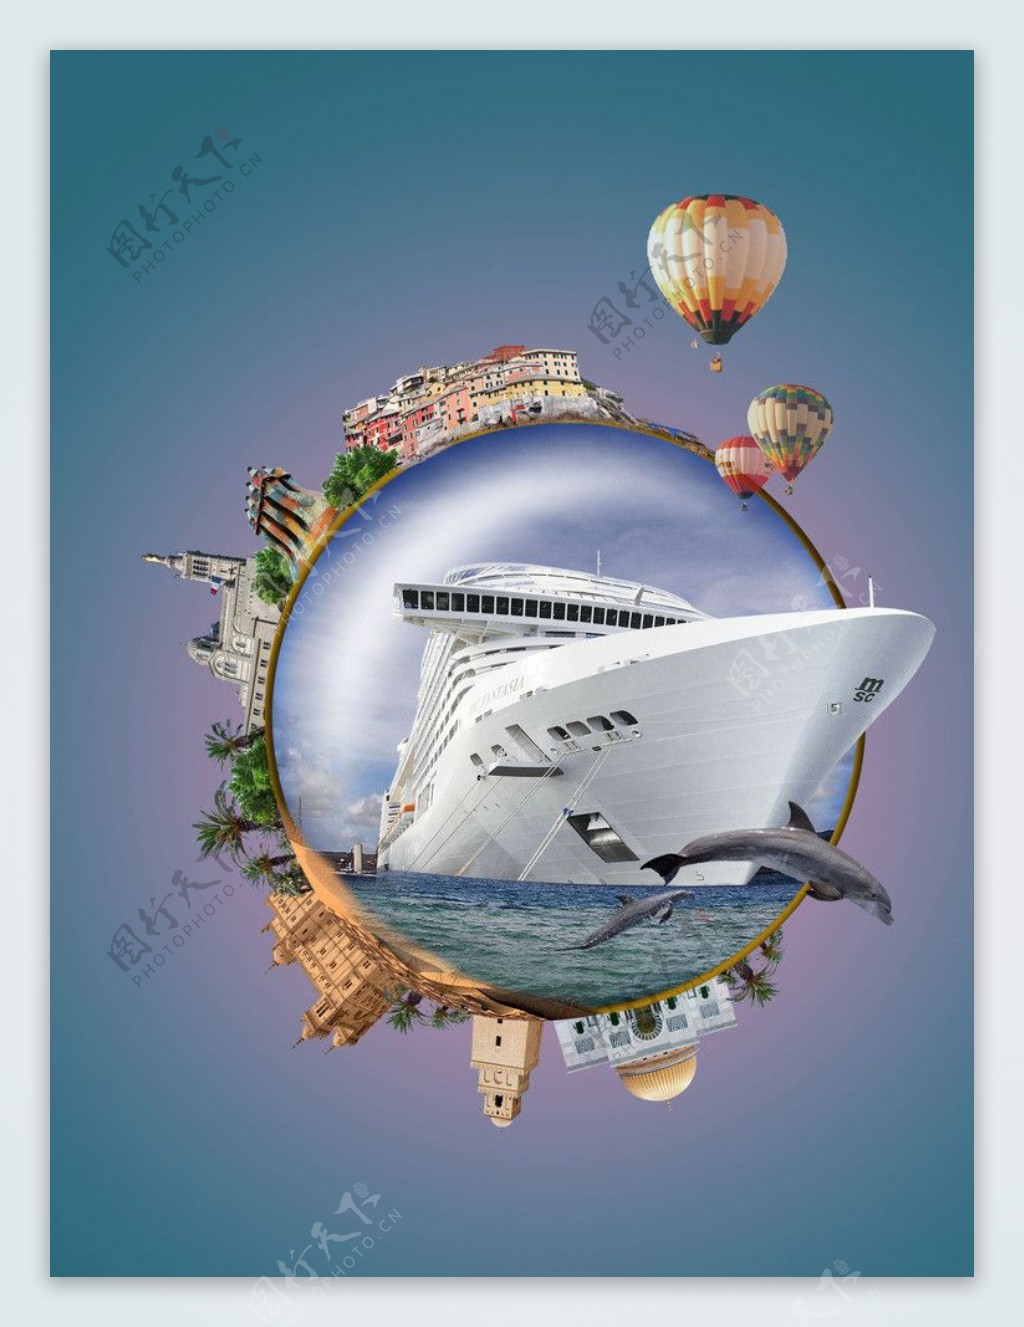 msc地中海邮轮图片